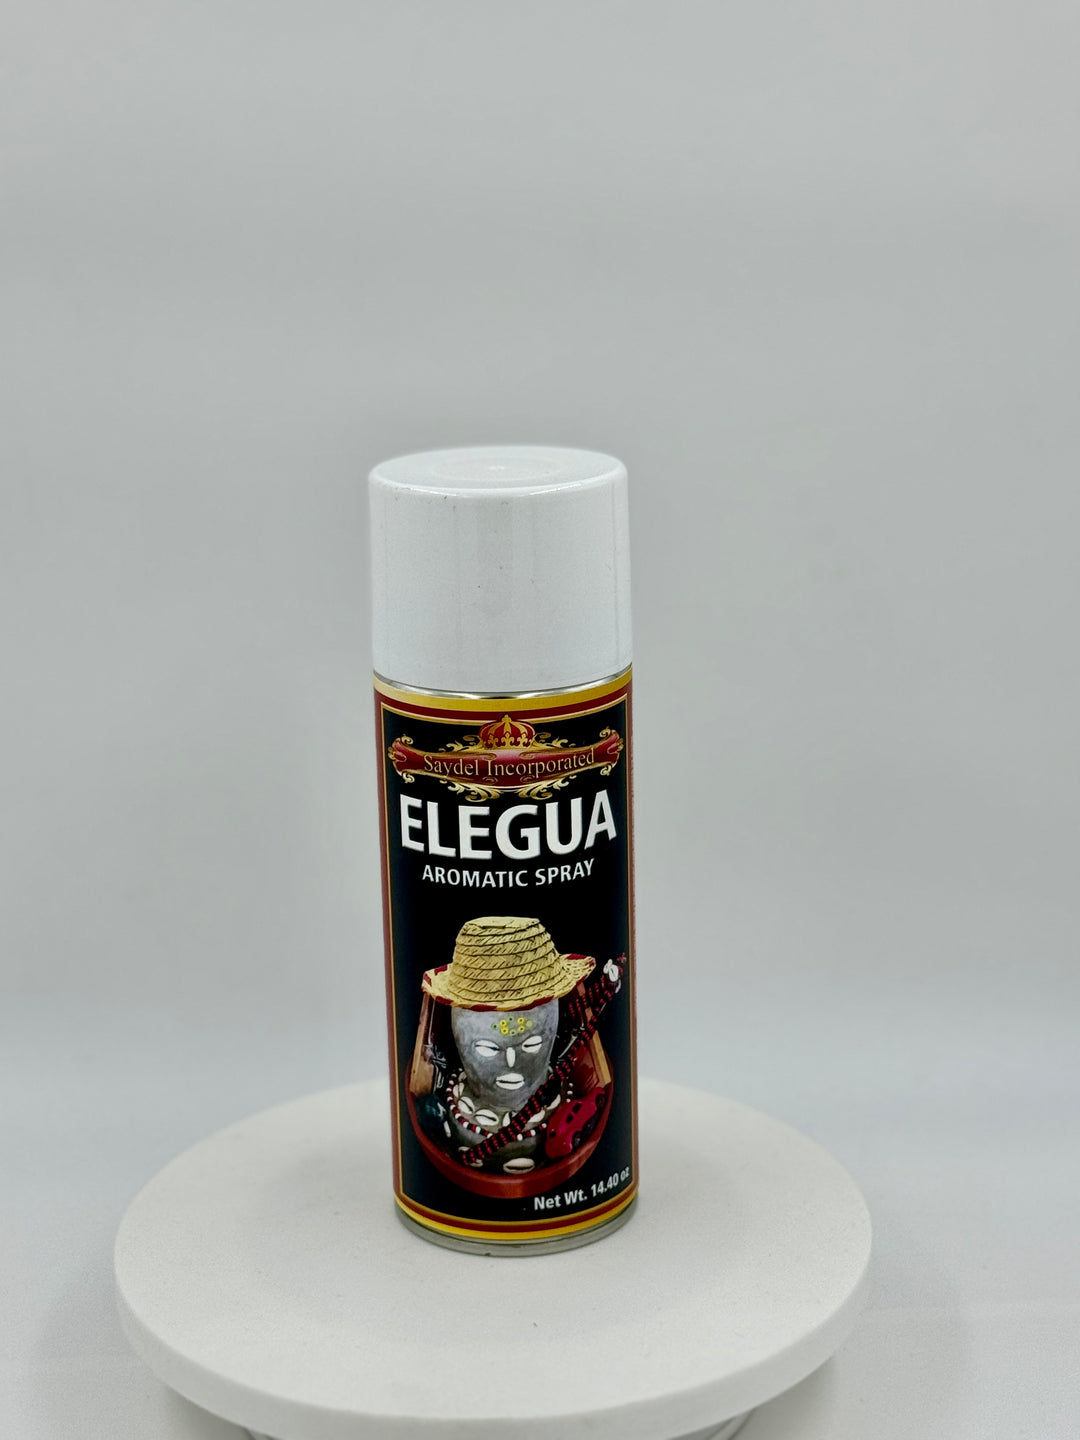 ELEGUA -Aromatic Spray